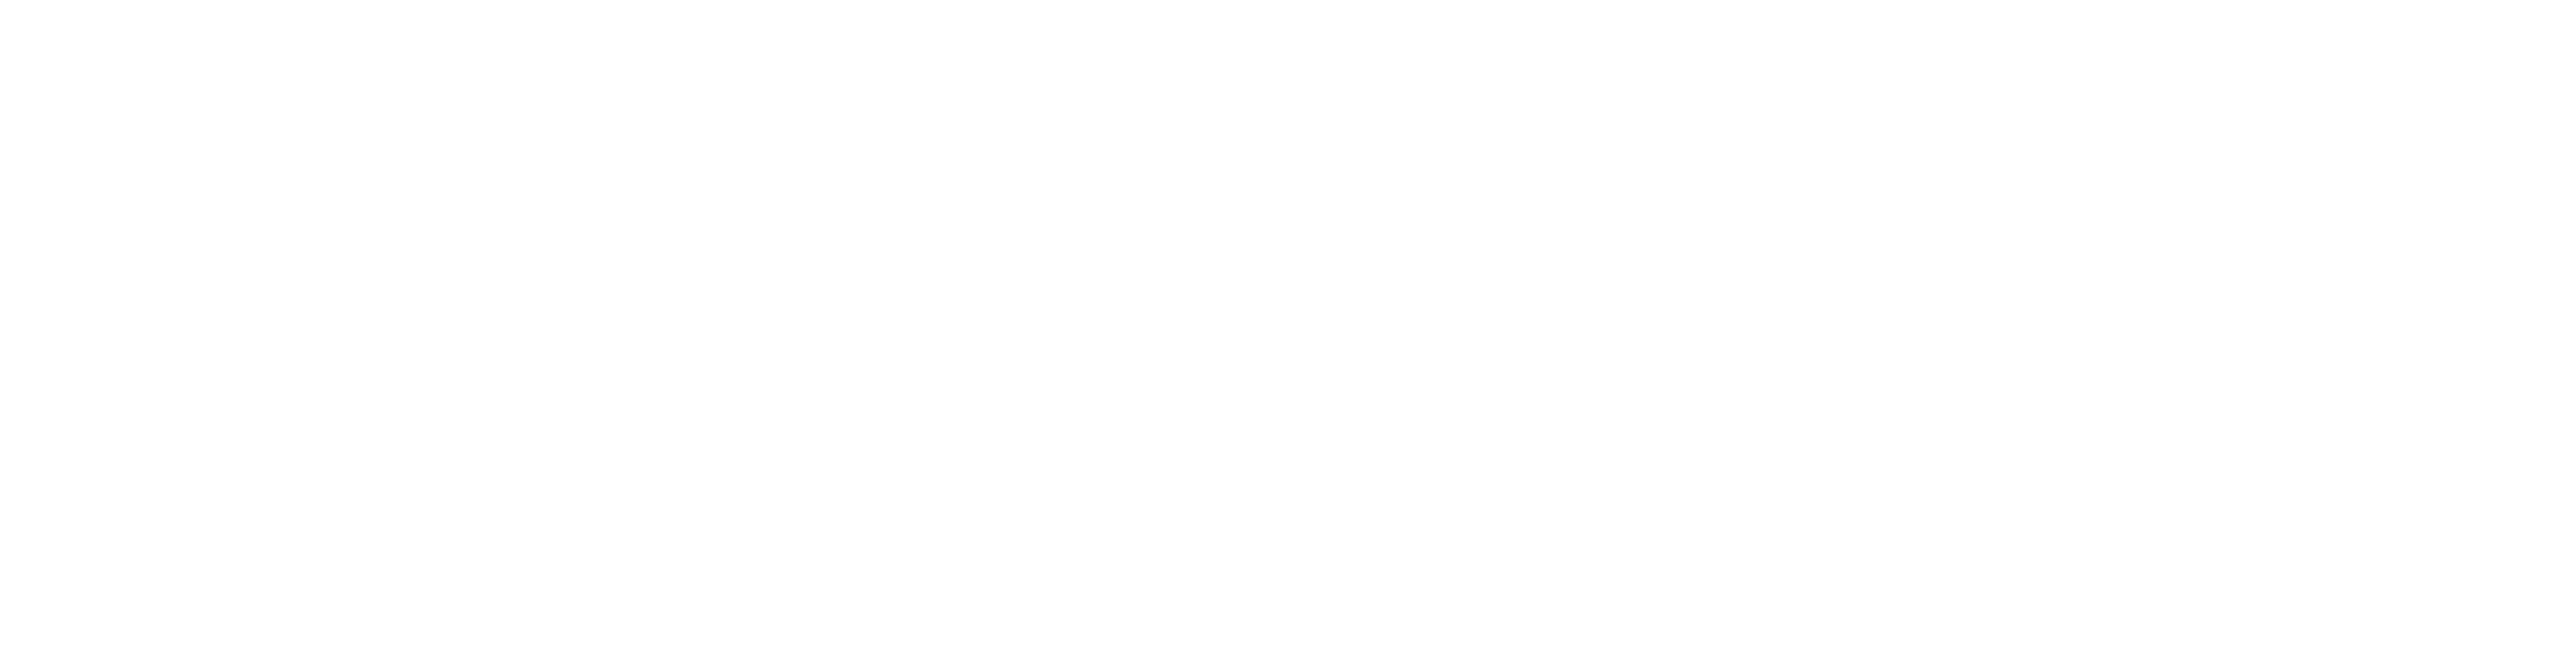 Wireless Social Logo - white no borders-1